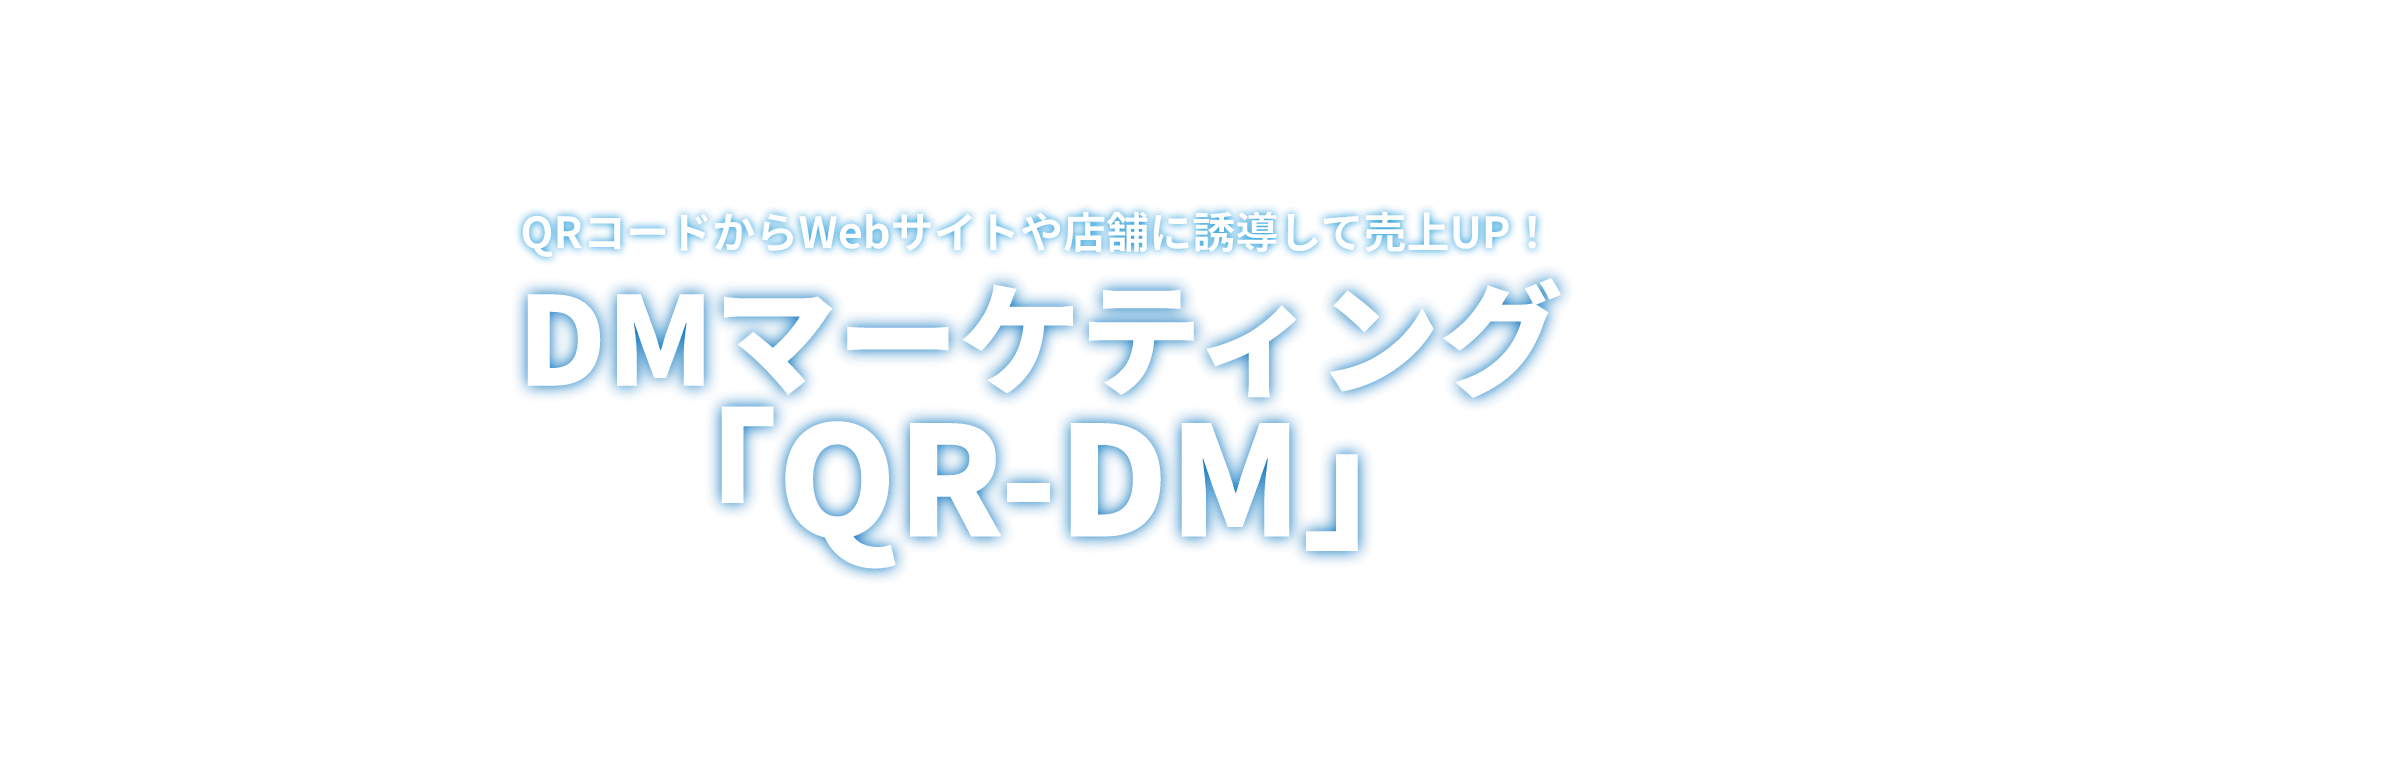 DMマーケティング「QR-DM」